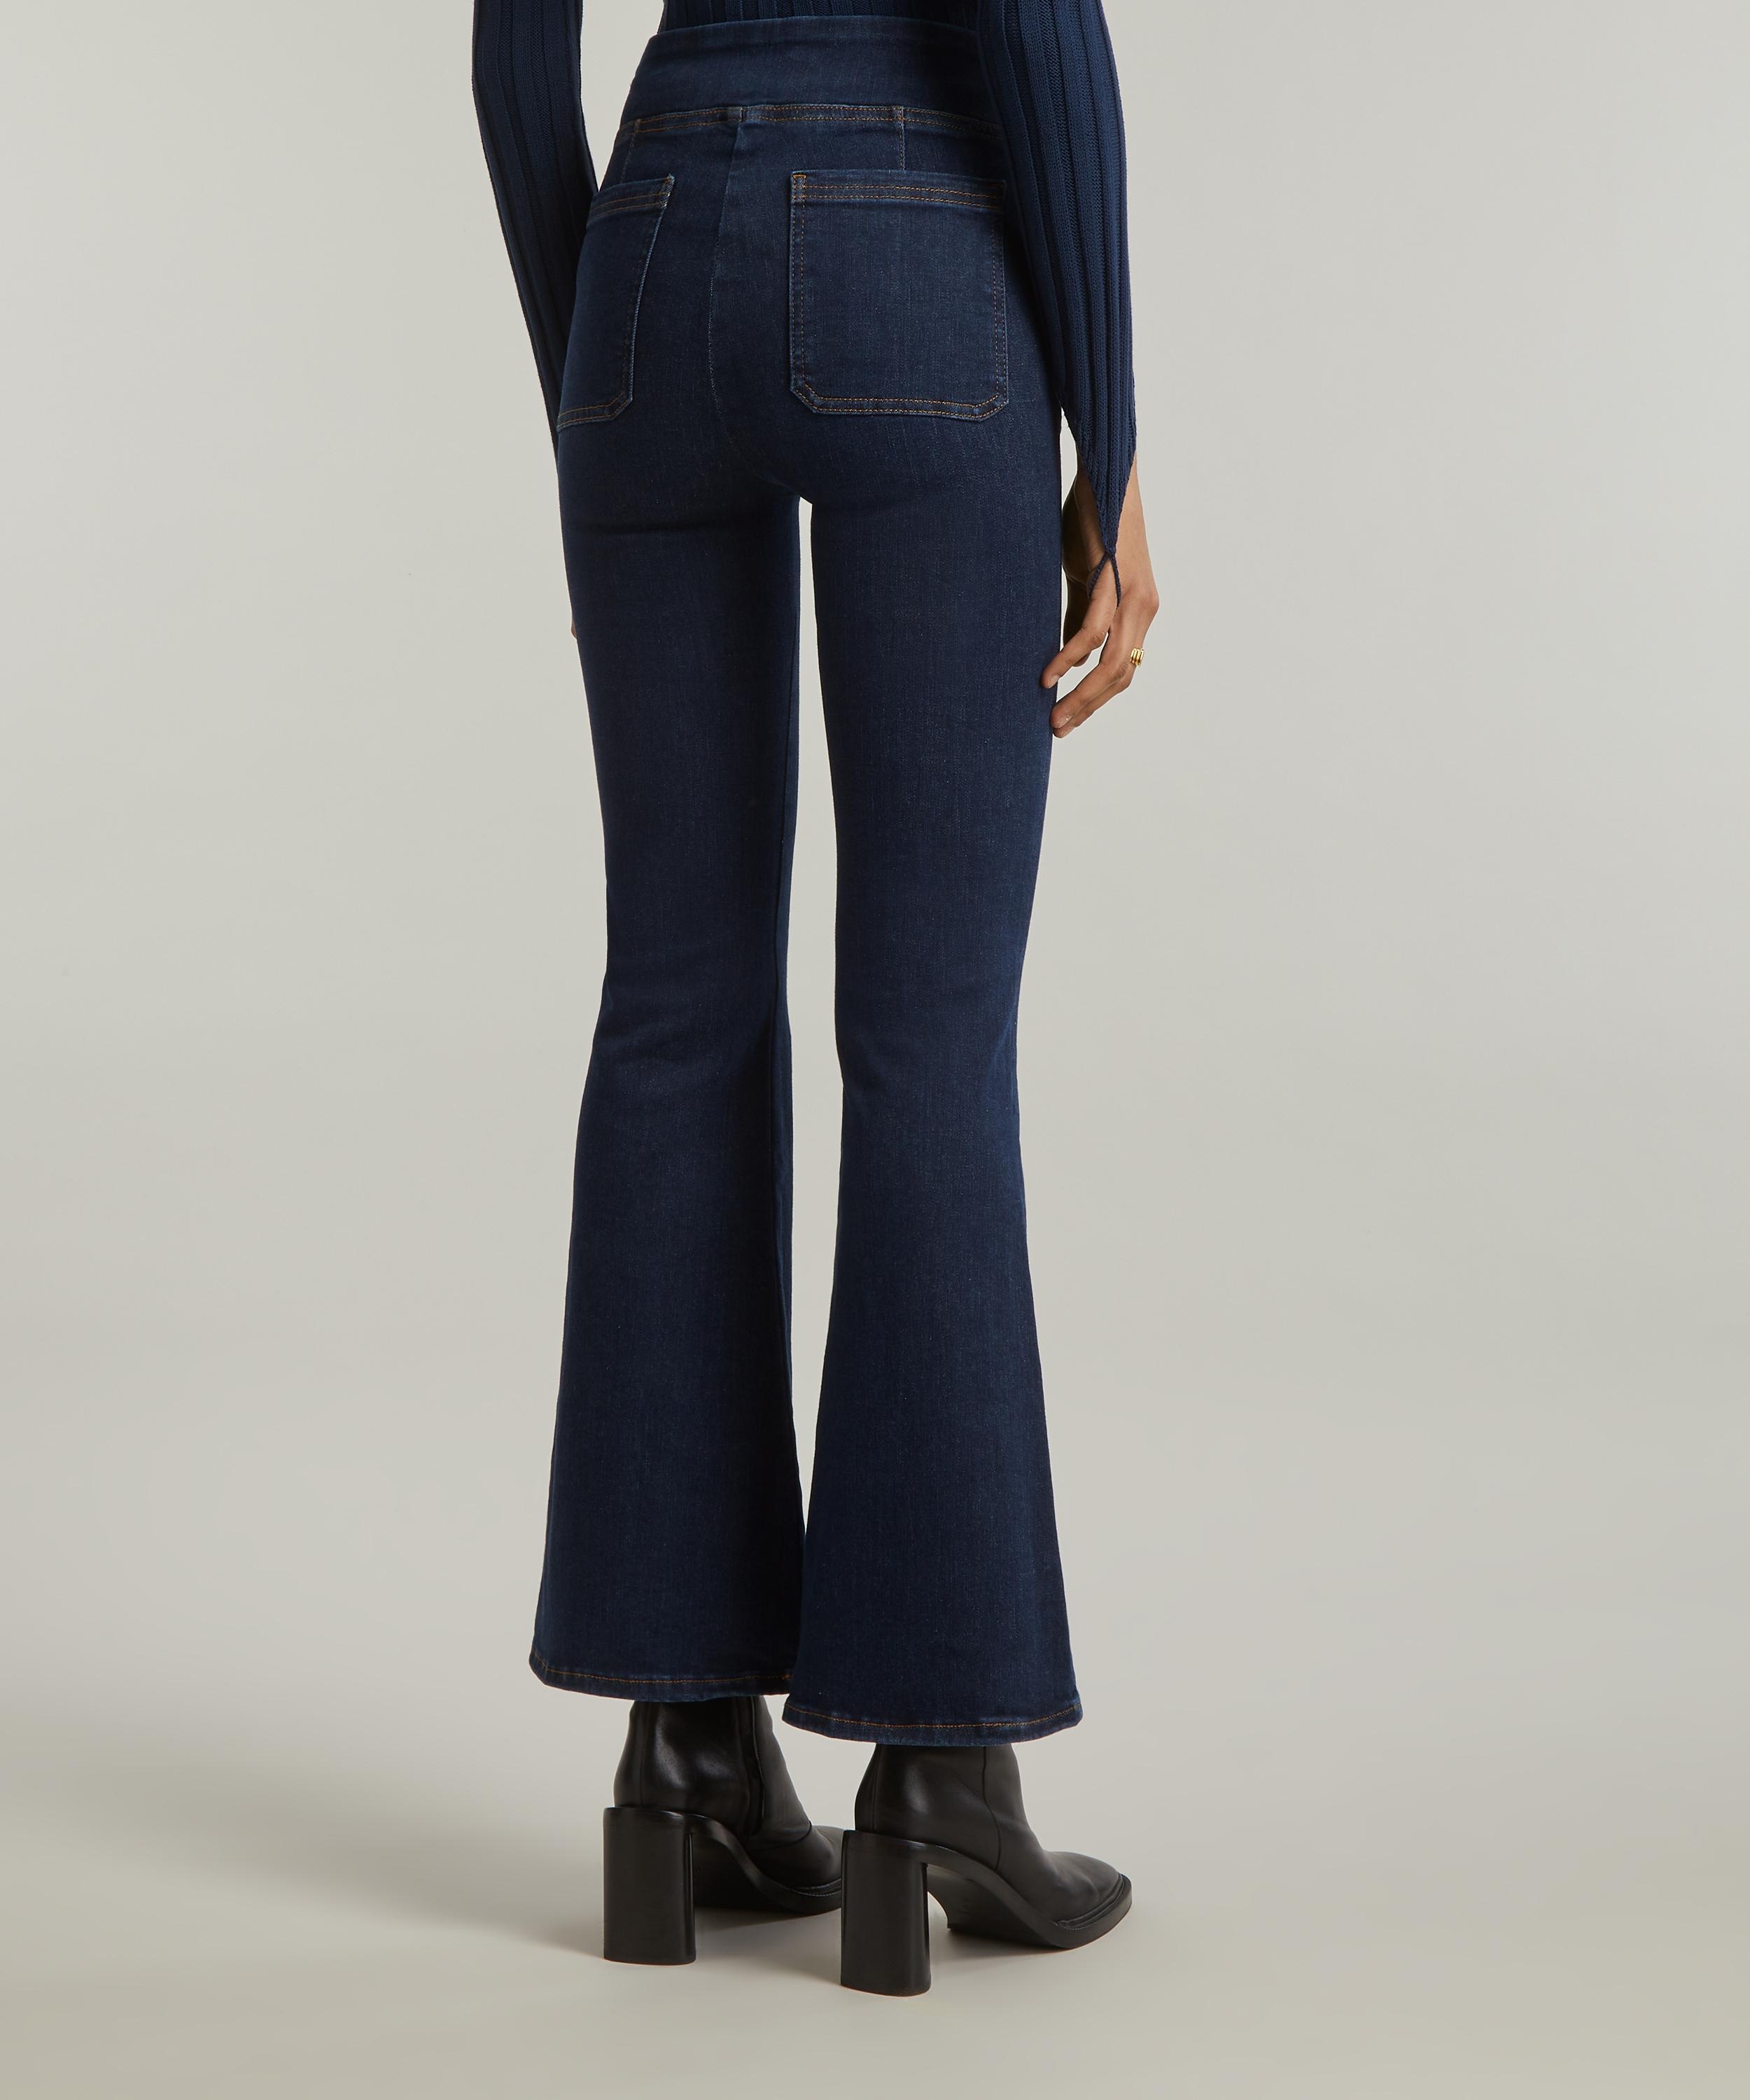 Bardot Jetset High-Rise Flare Jeans - 4